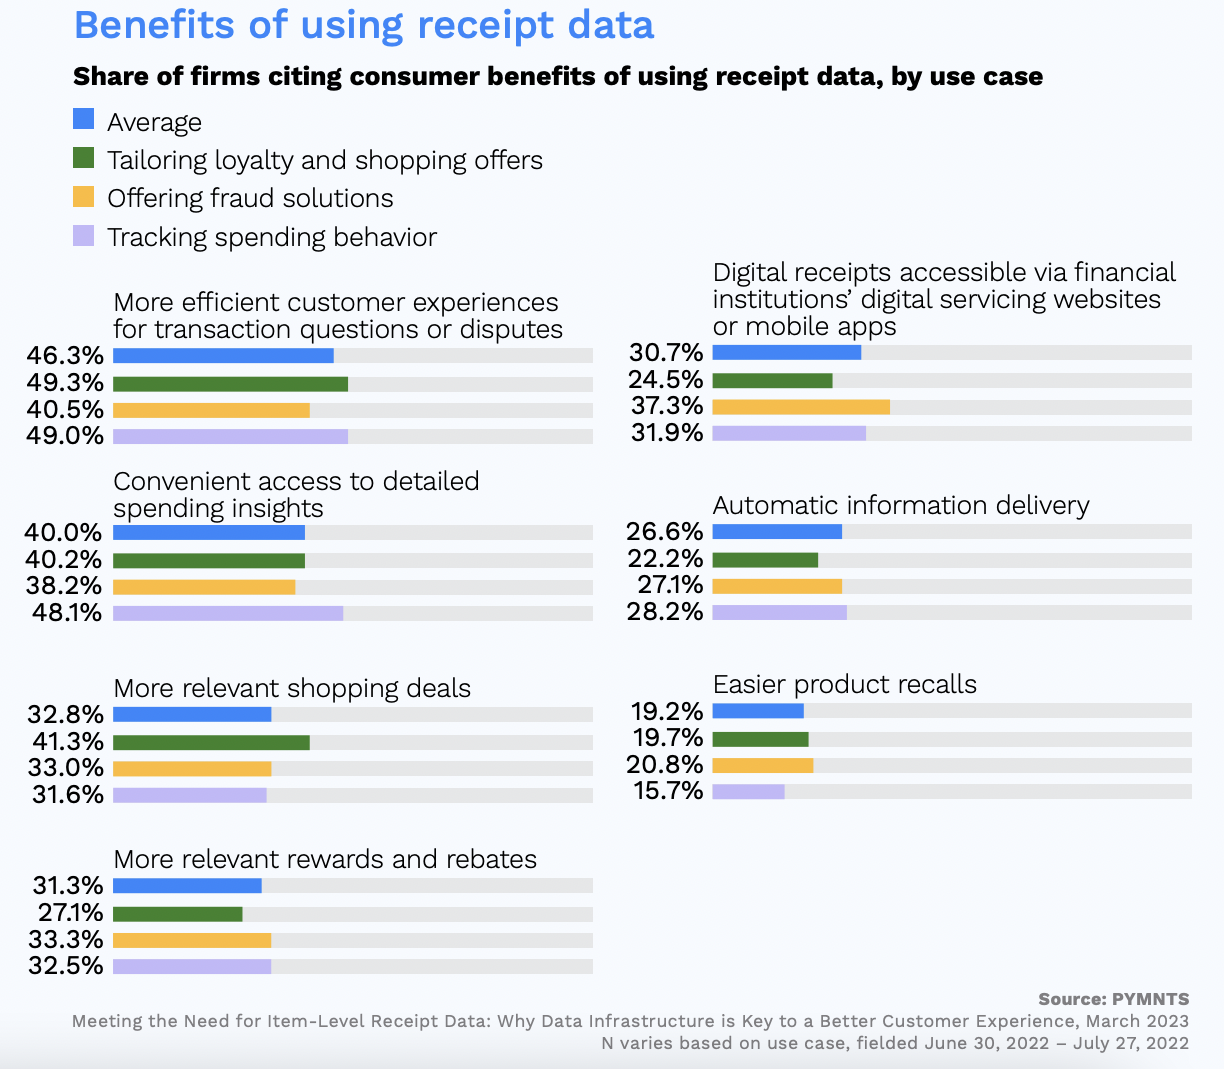 Benefits of using receipt data